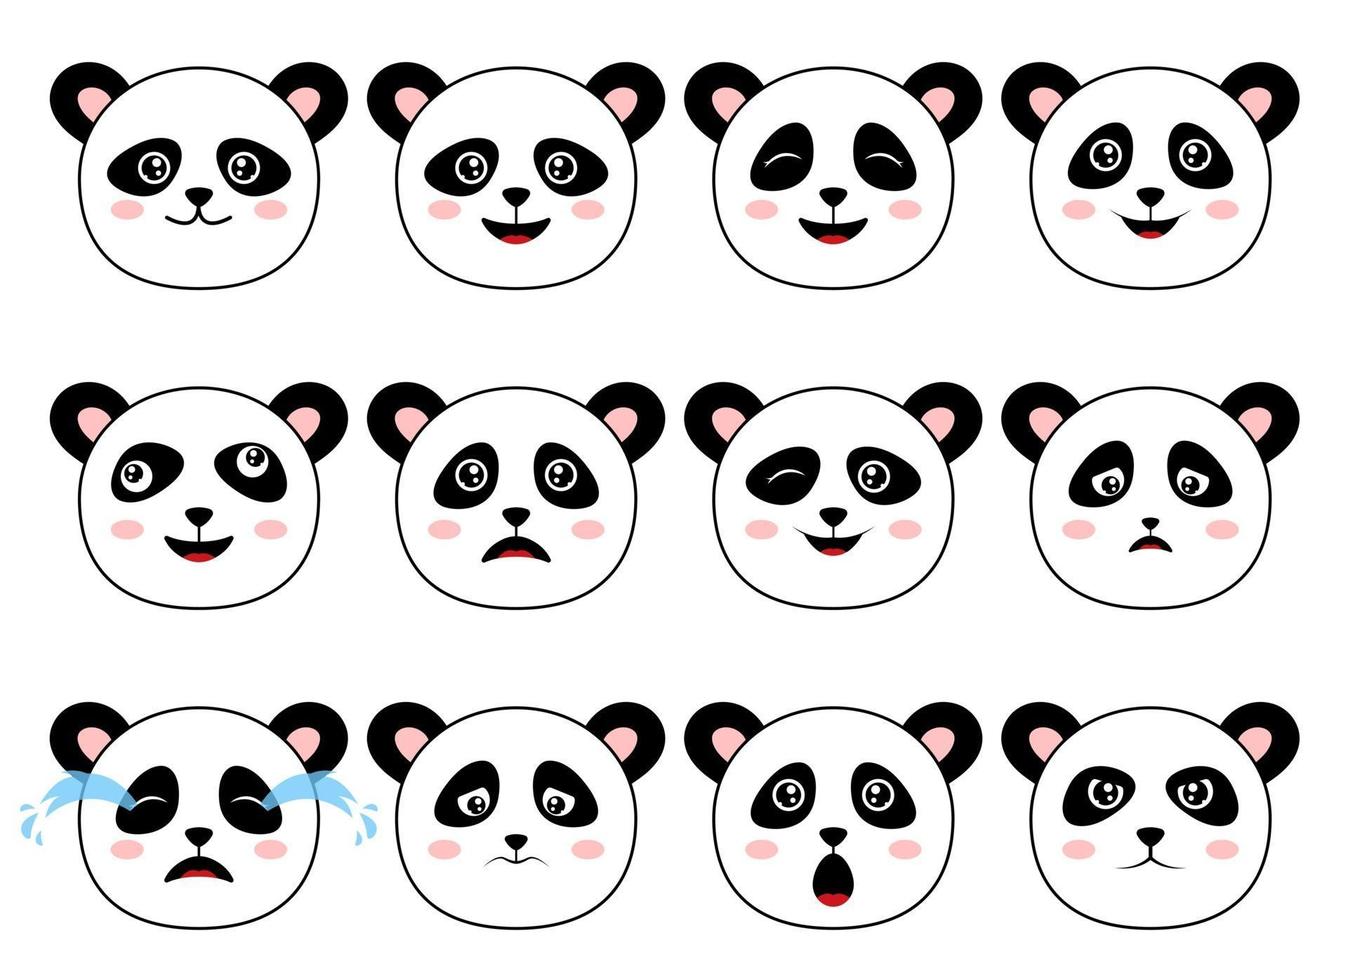 Panda bear vector design illustration isolated on white background